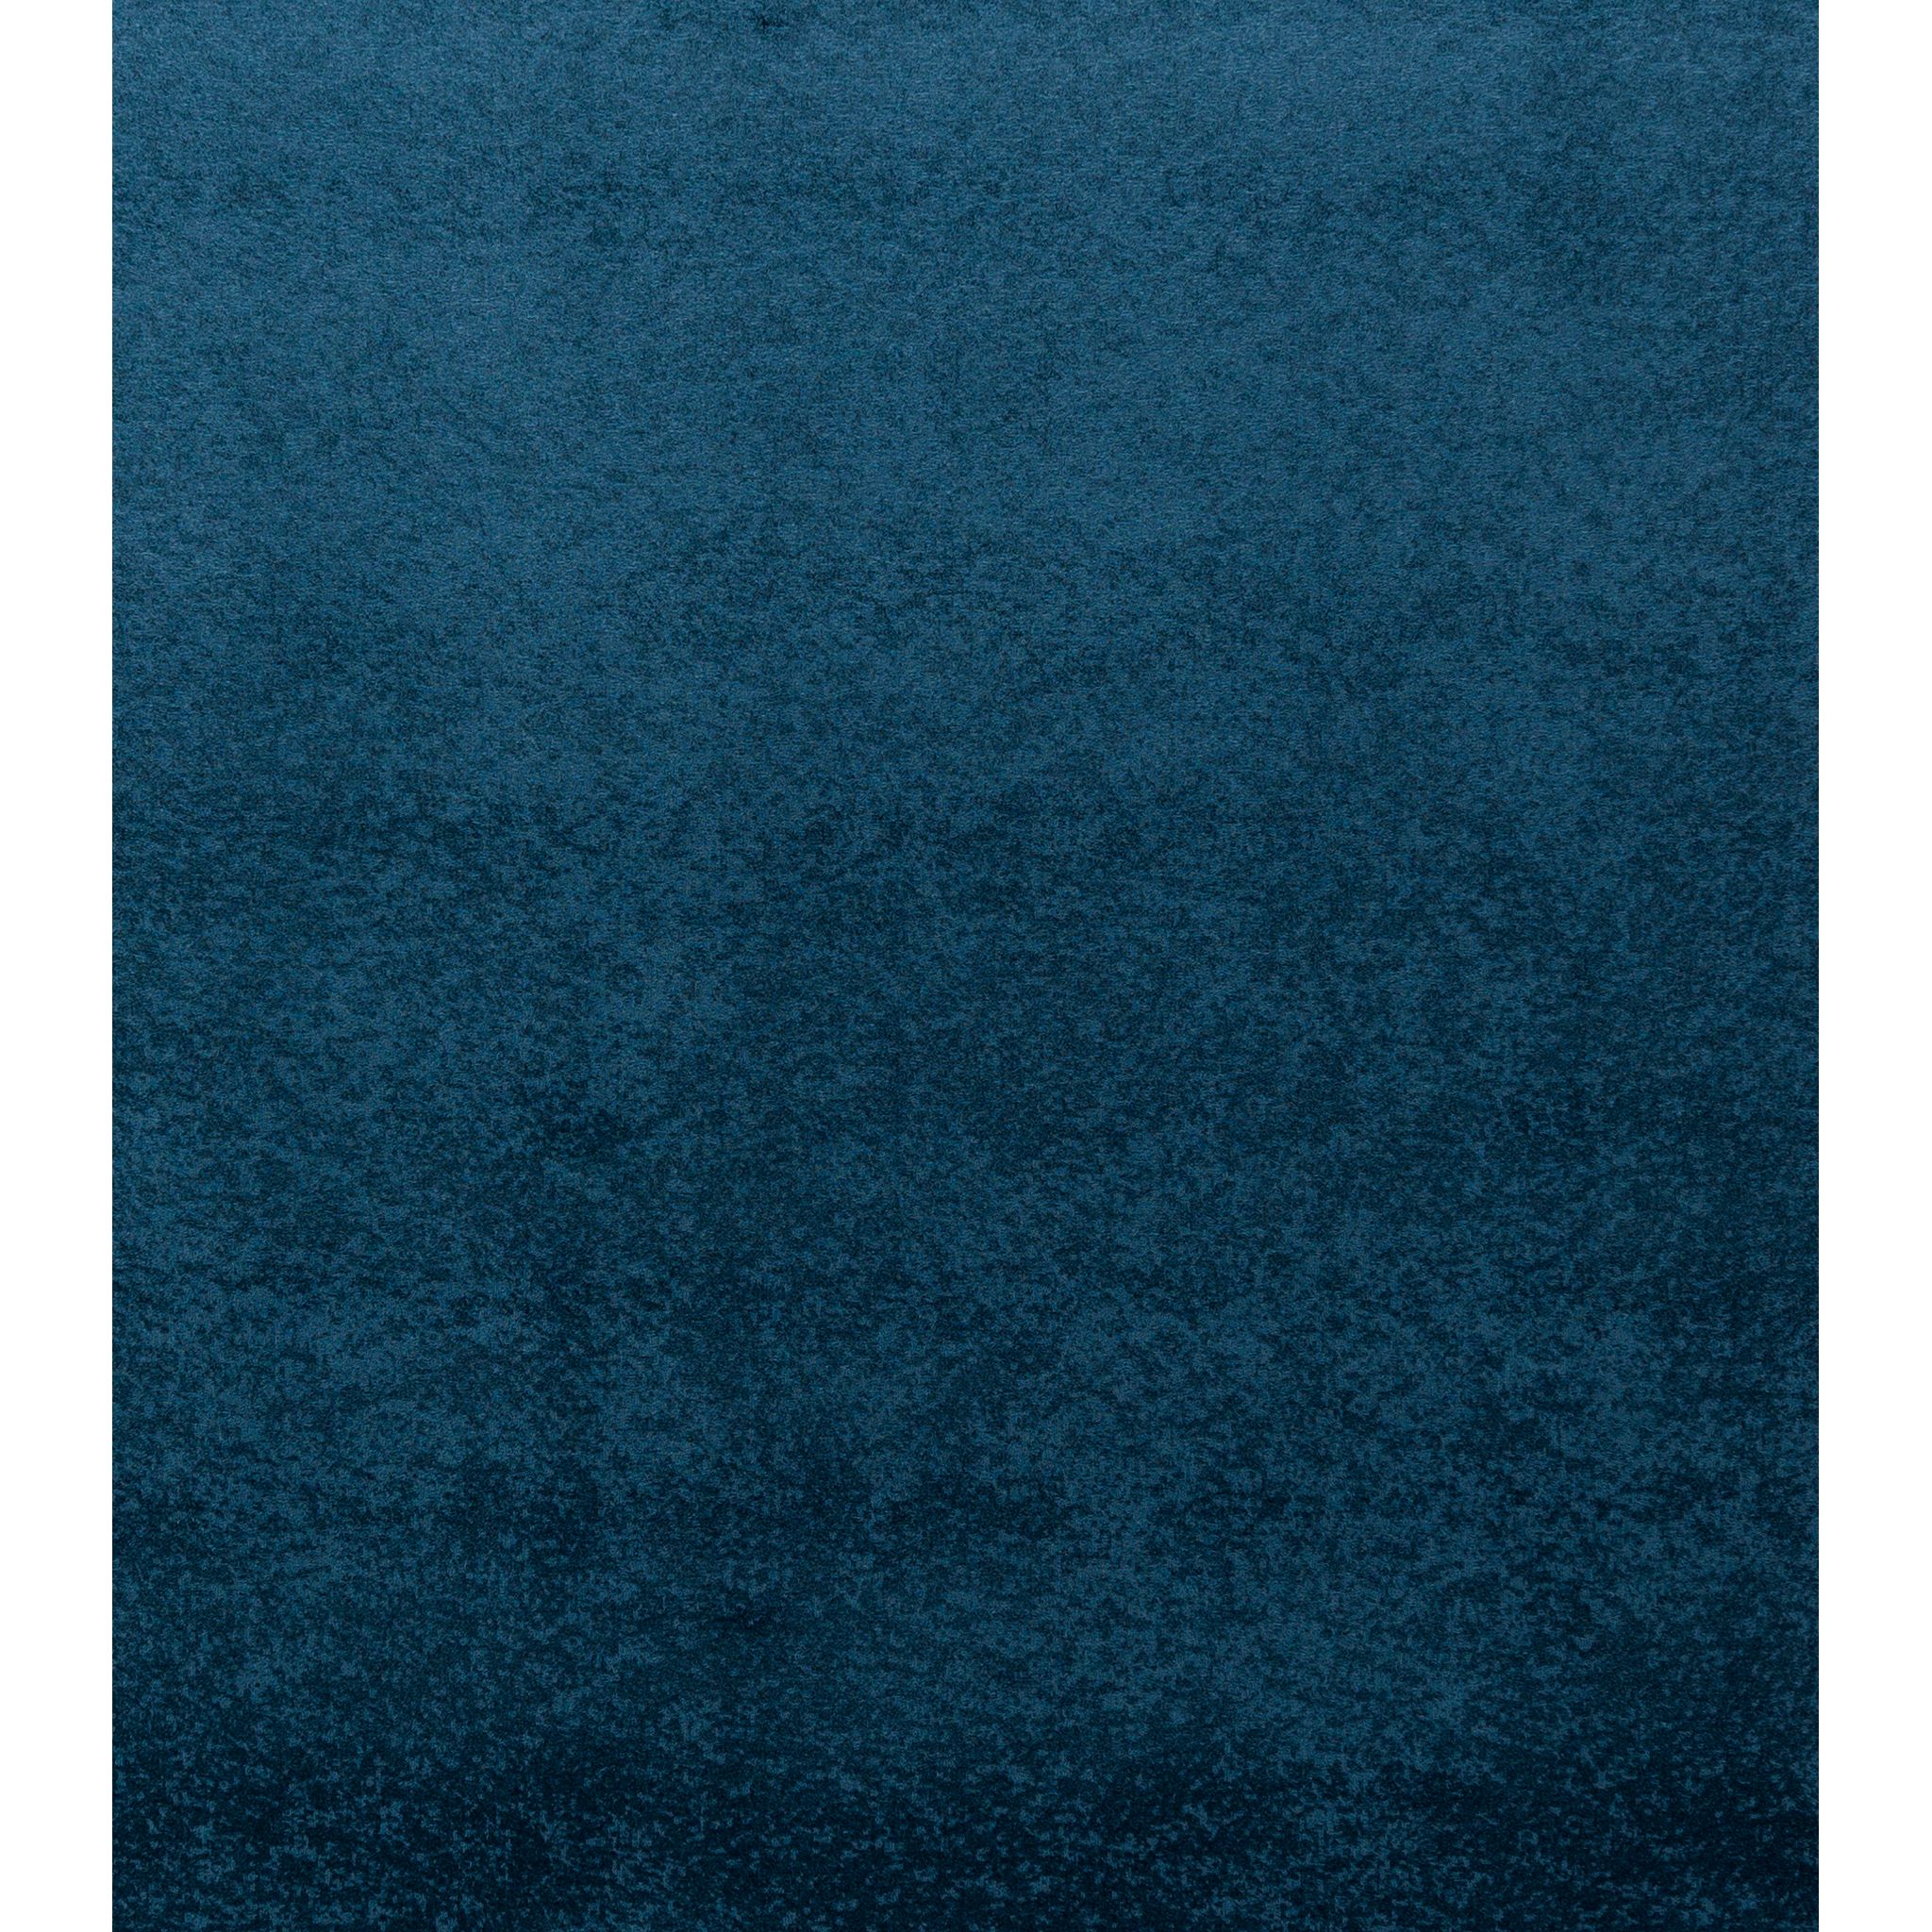 Maynard Tufted Carpet, Turquoise Default Title